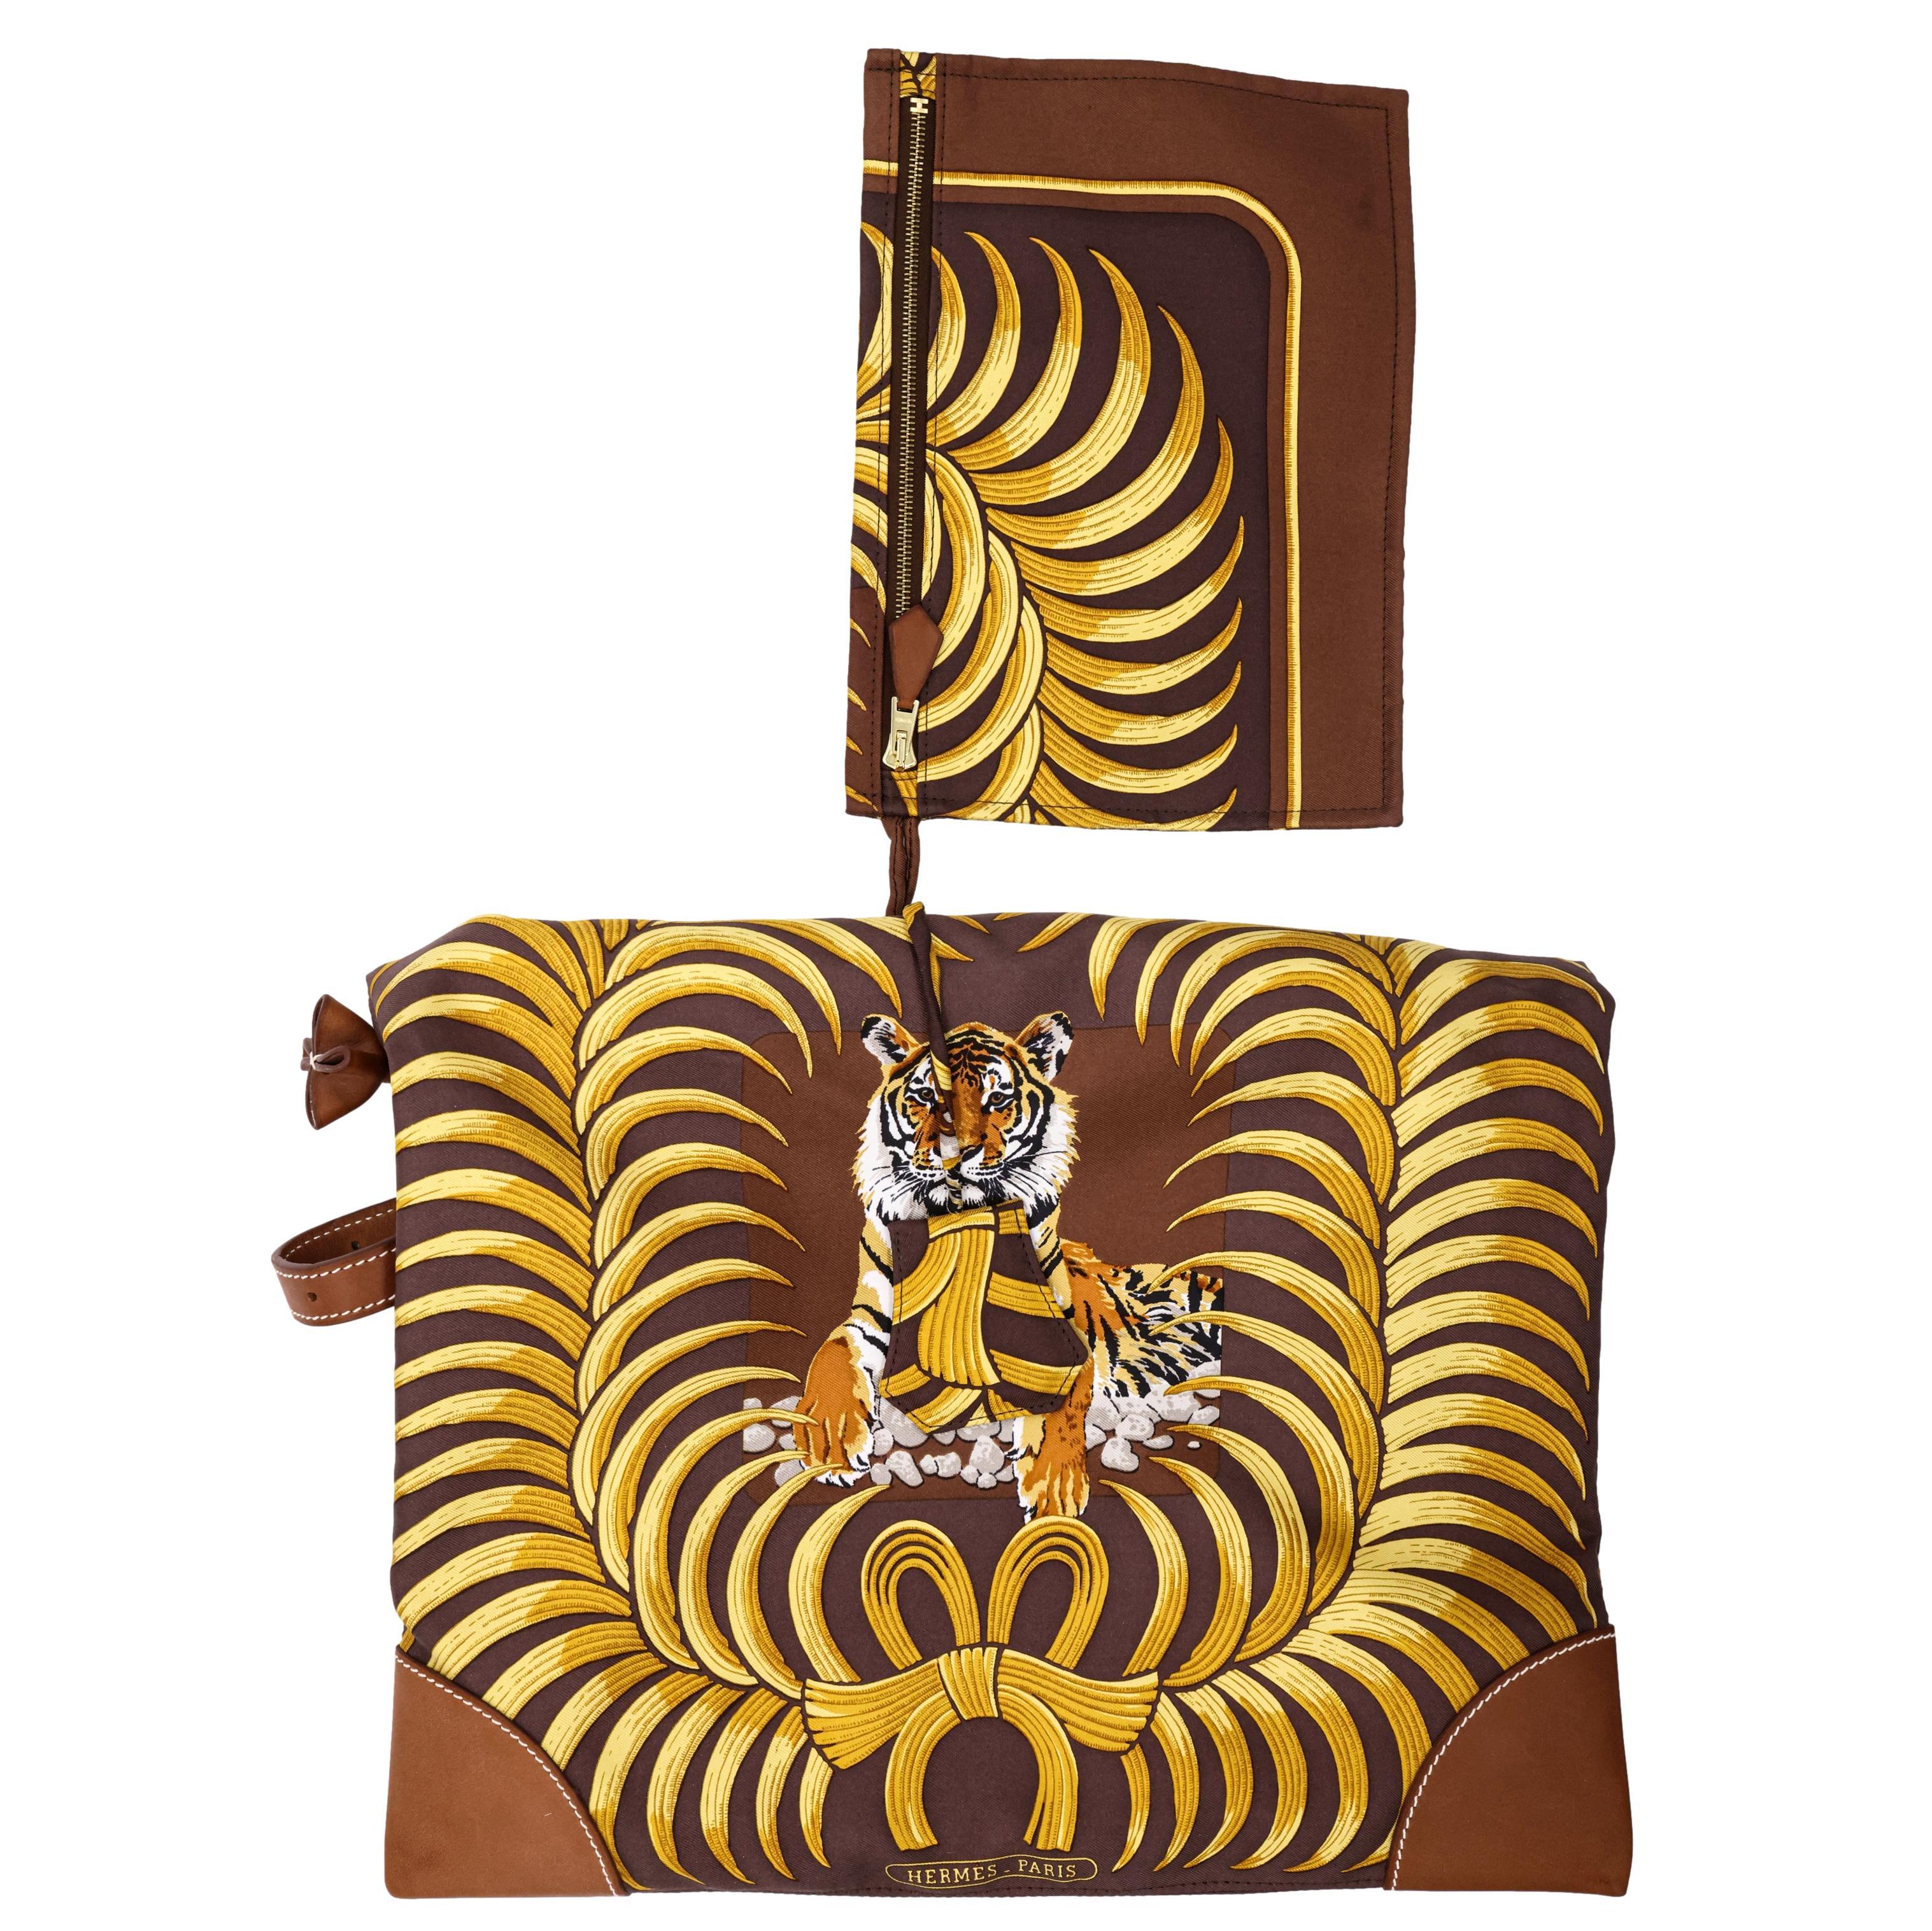 Women's or Men's Hermès Limited Edition Silky City Tiger Royal Barenia Leather Shoulder Bag, 2008.